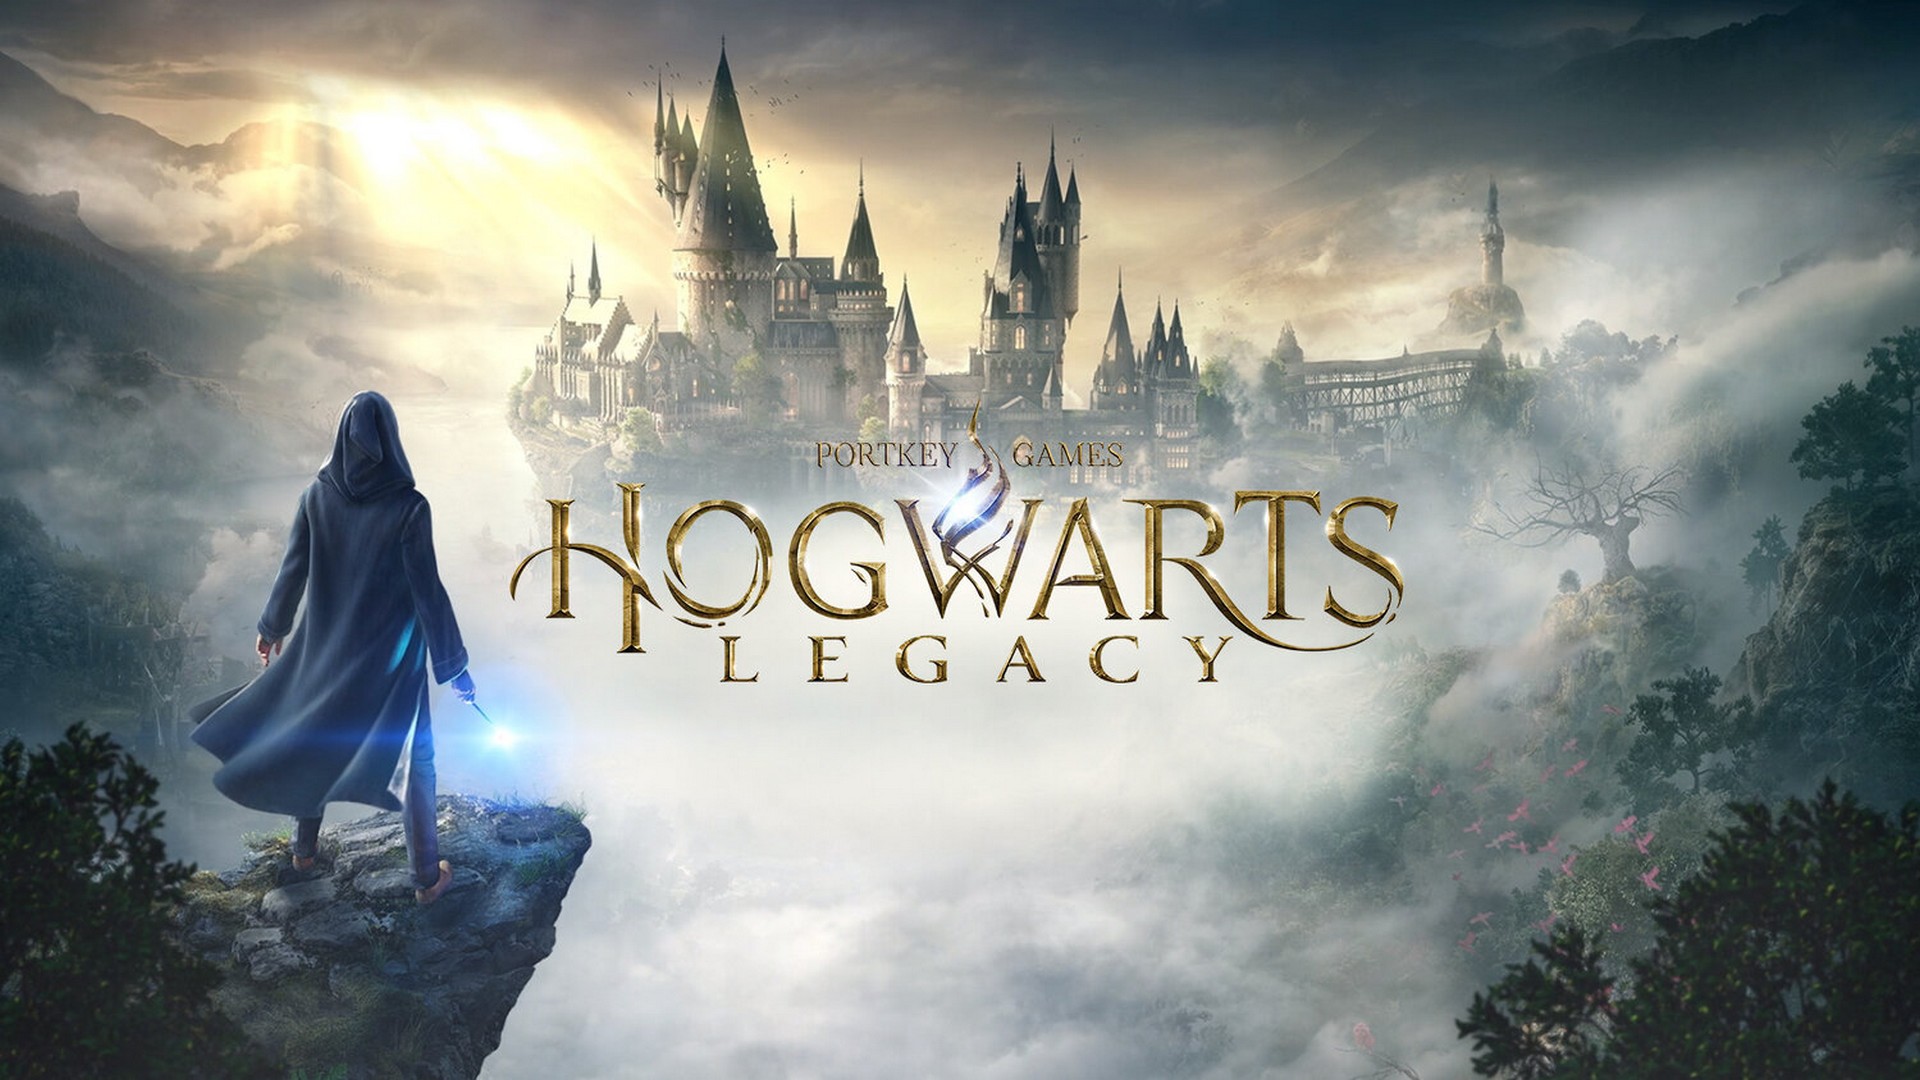 Hogwarts Legacy (PS4/Playstation 4) BRAND NEW